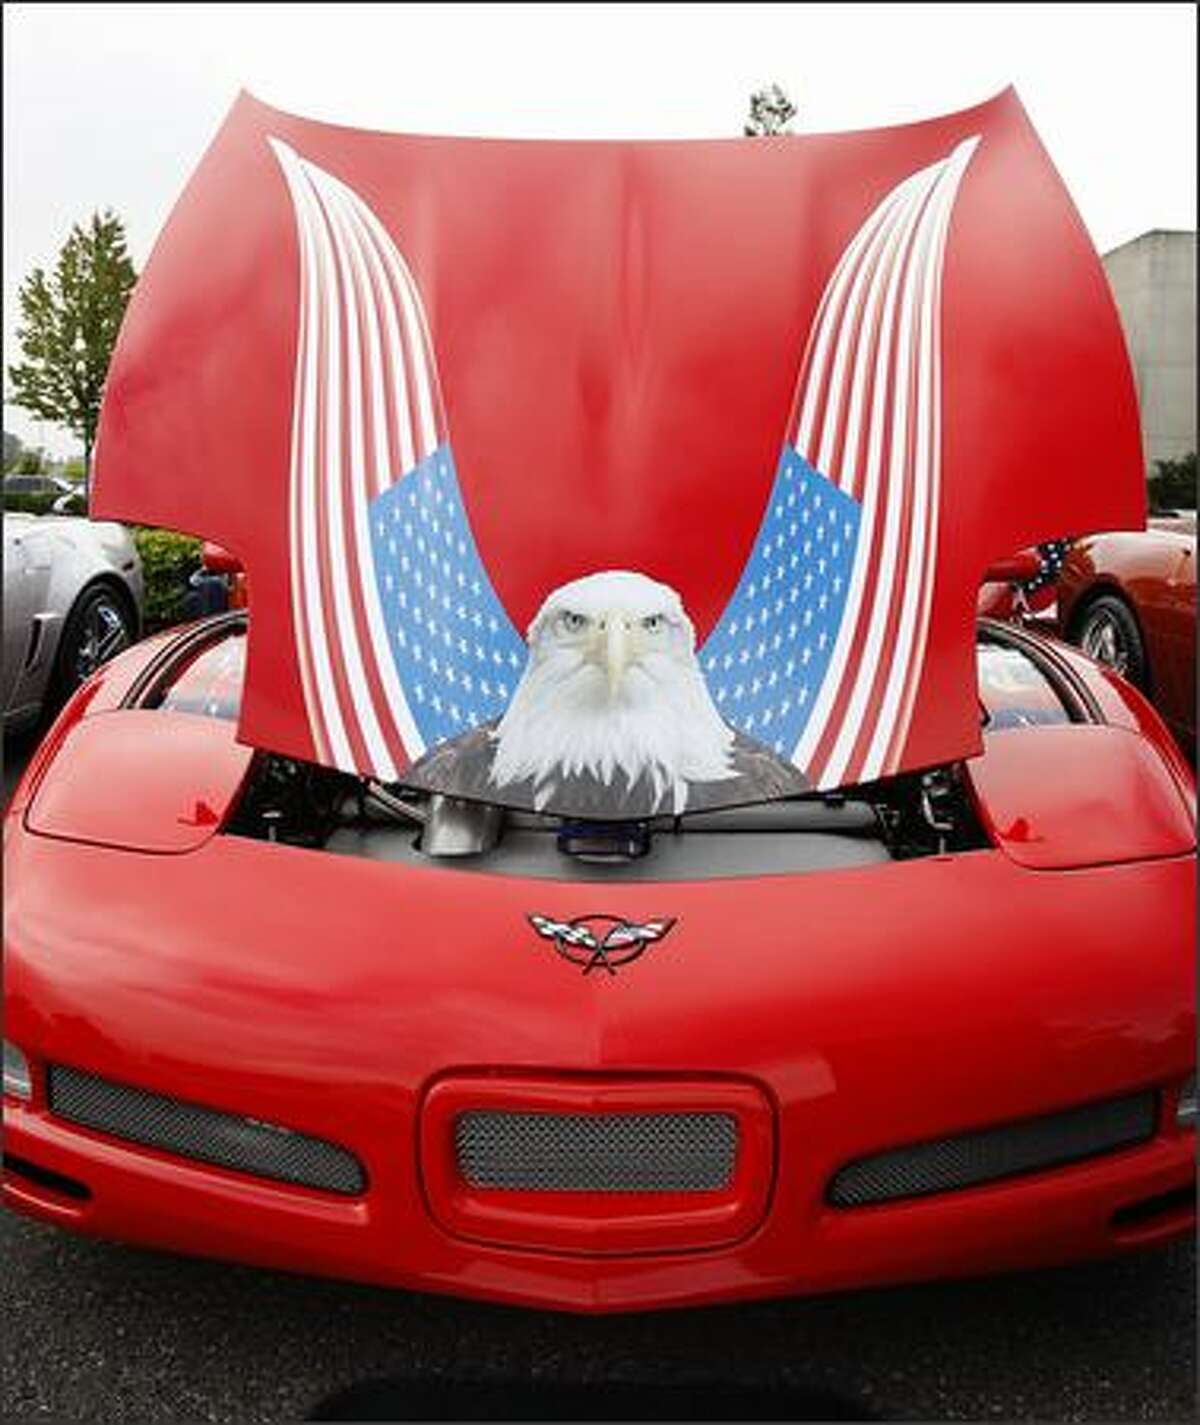 A patriotic Corvette on display.